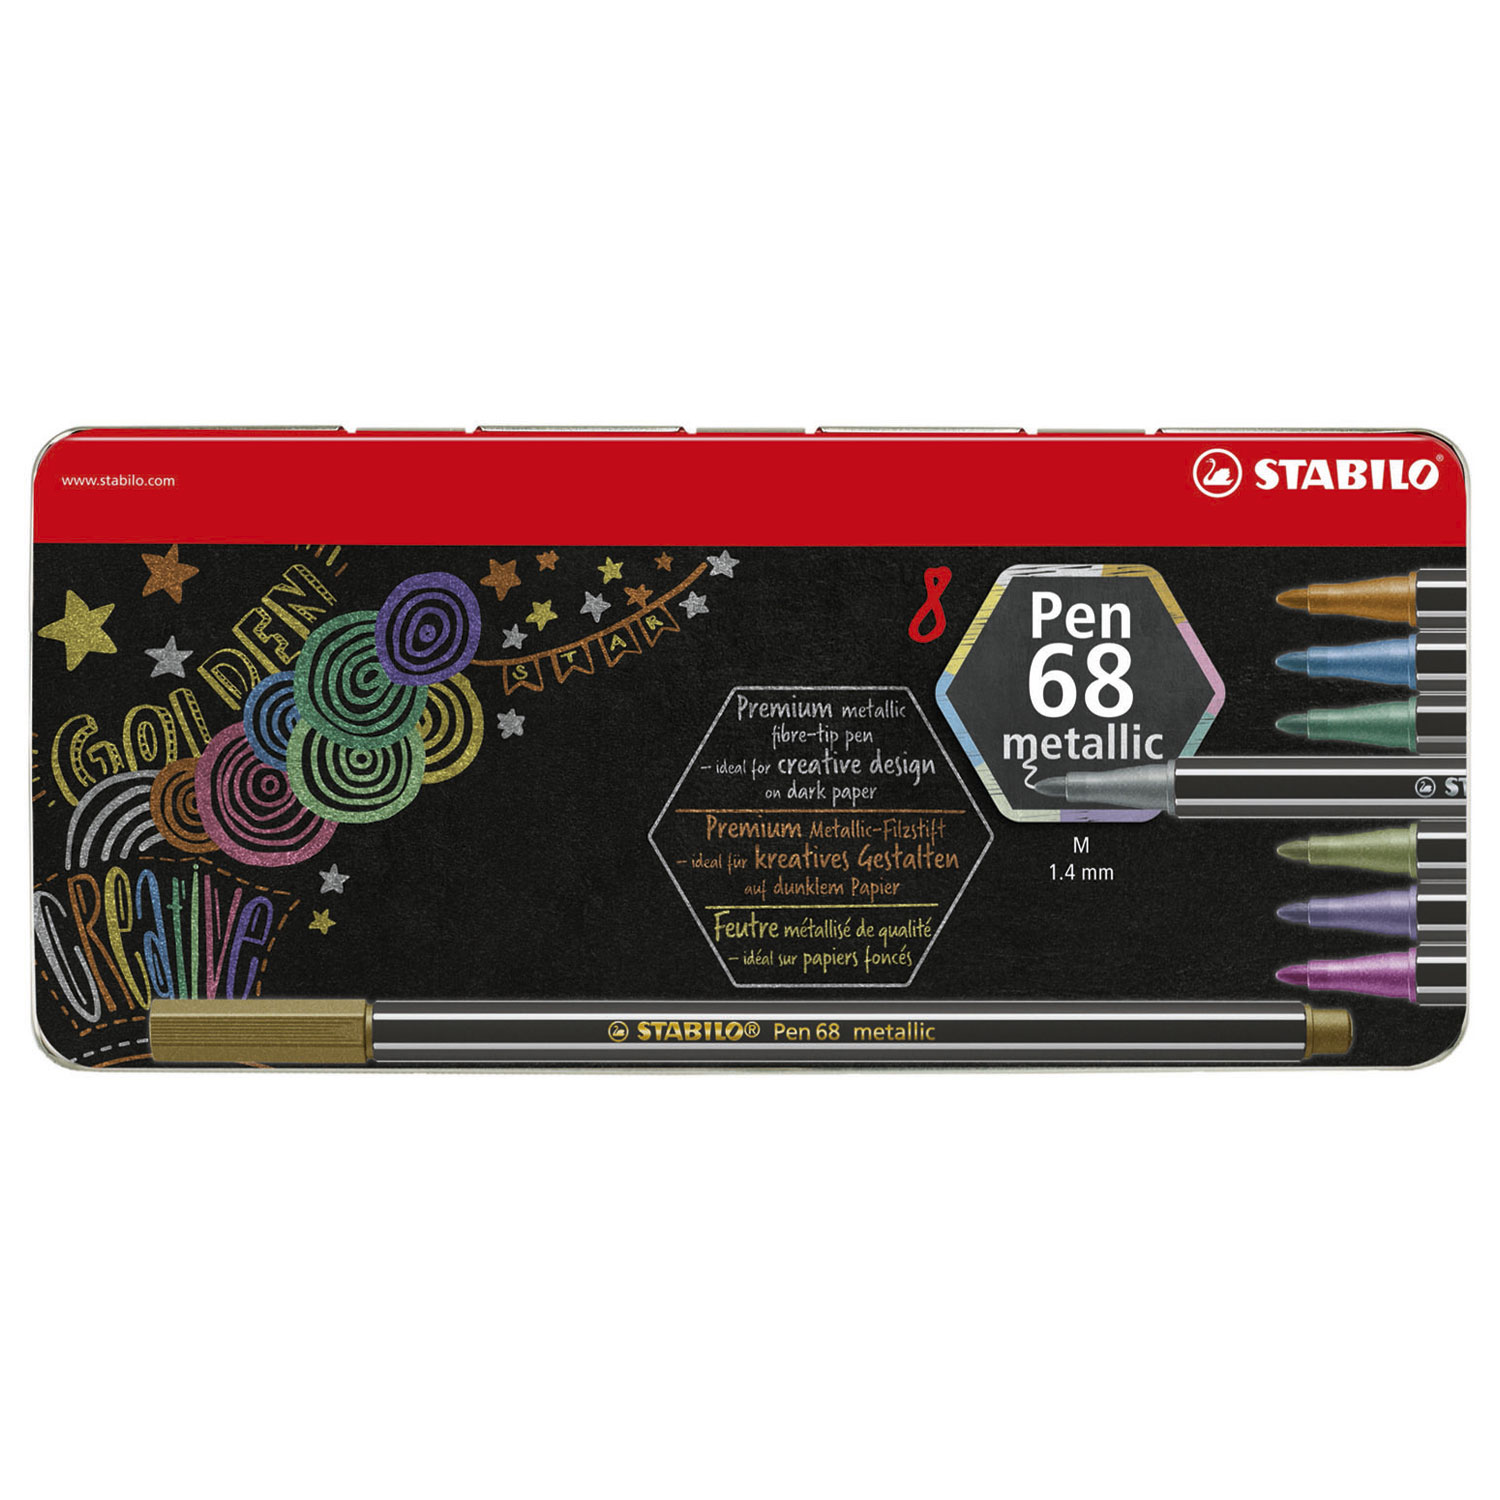  Stabilo Pen 68 Metallic Marker - 1.4 mm - 8 Color Set